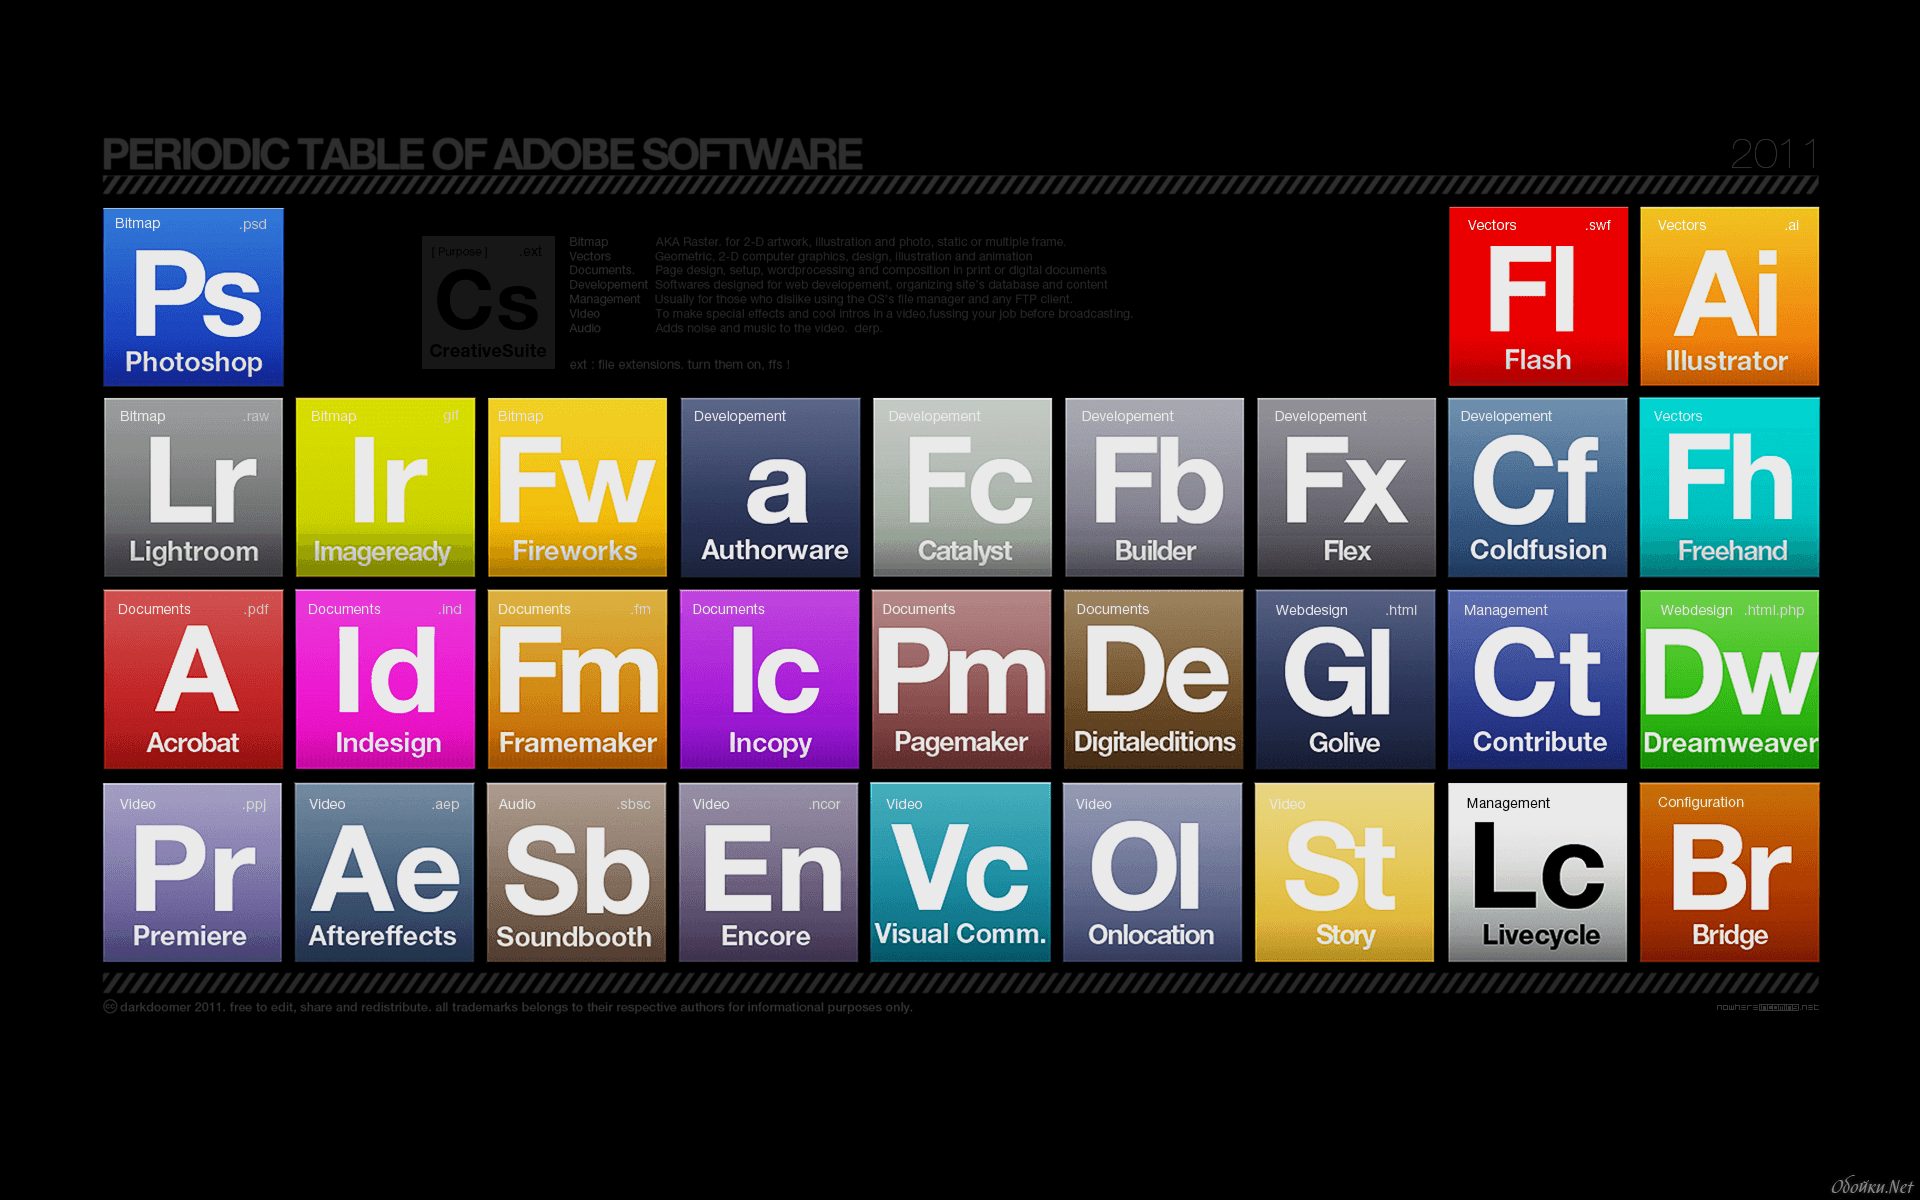 Adobe Wallpaper, Adobe Wallpaper for Desktop. V.11. Adobe